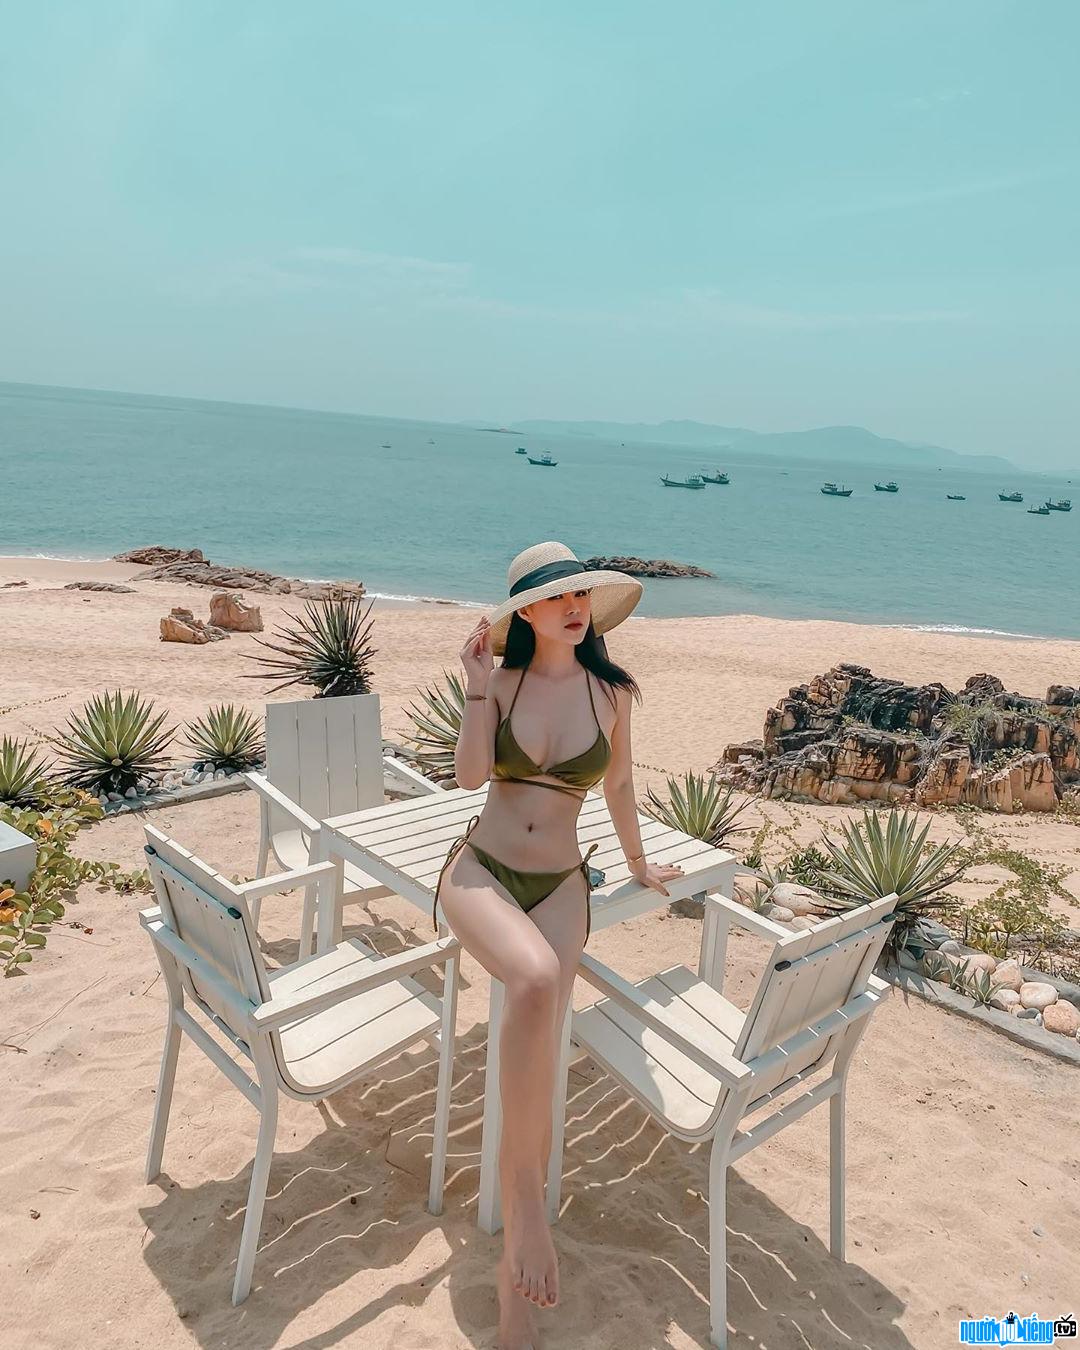  Nguyen Thao shows off her beautiful figure with bikini